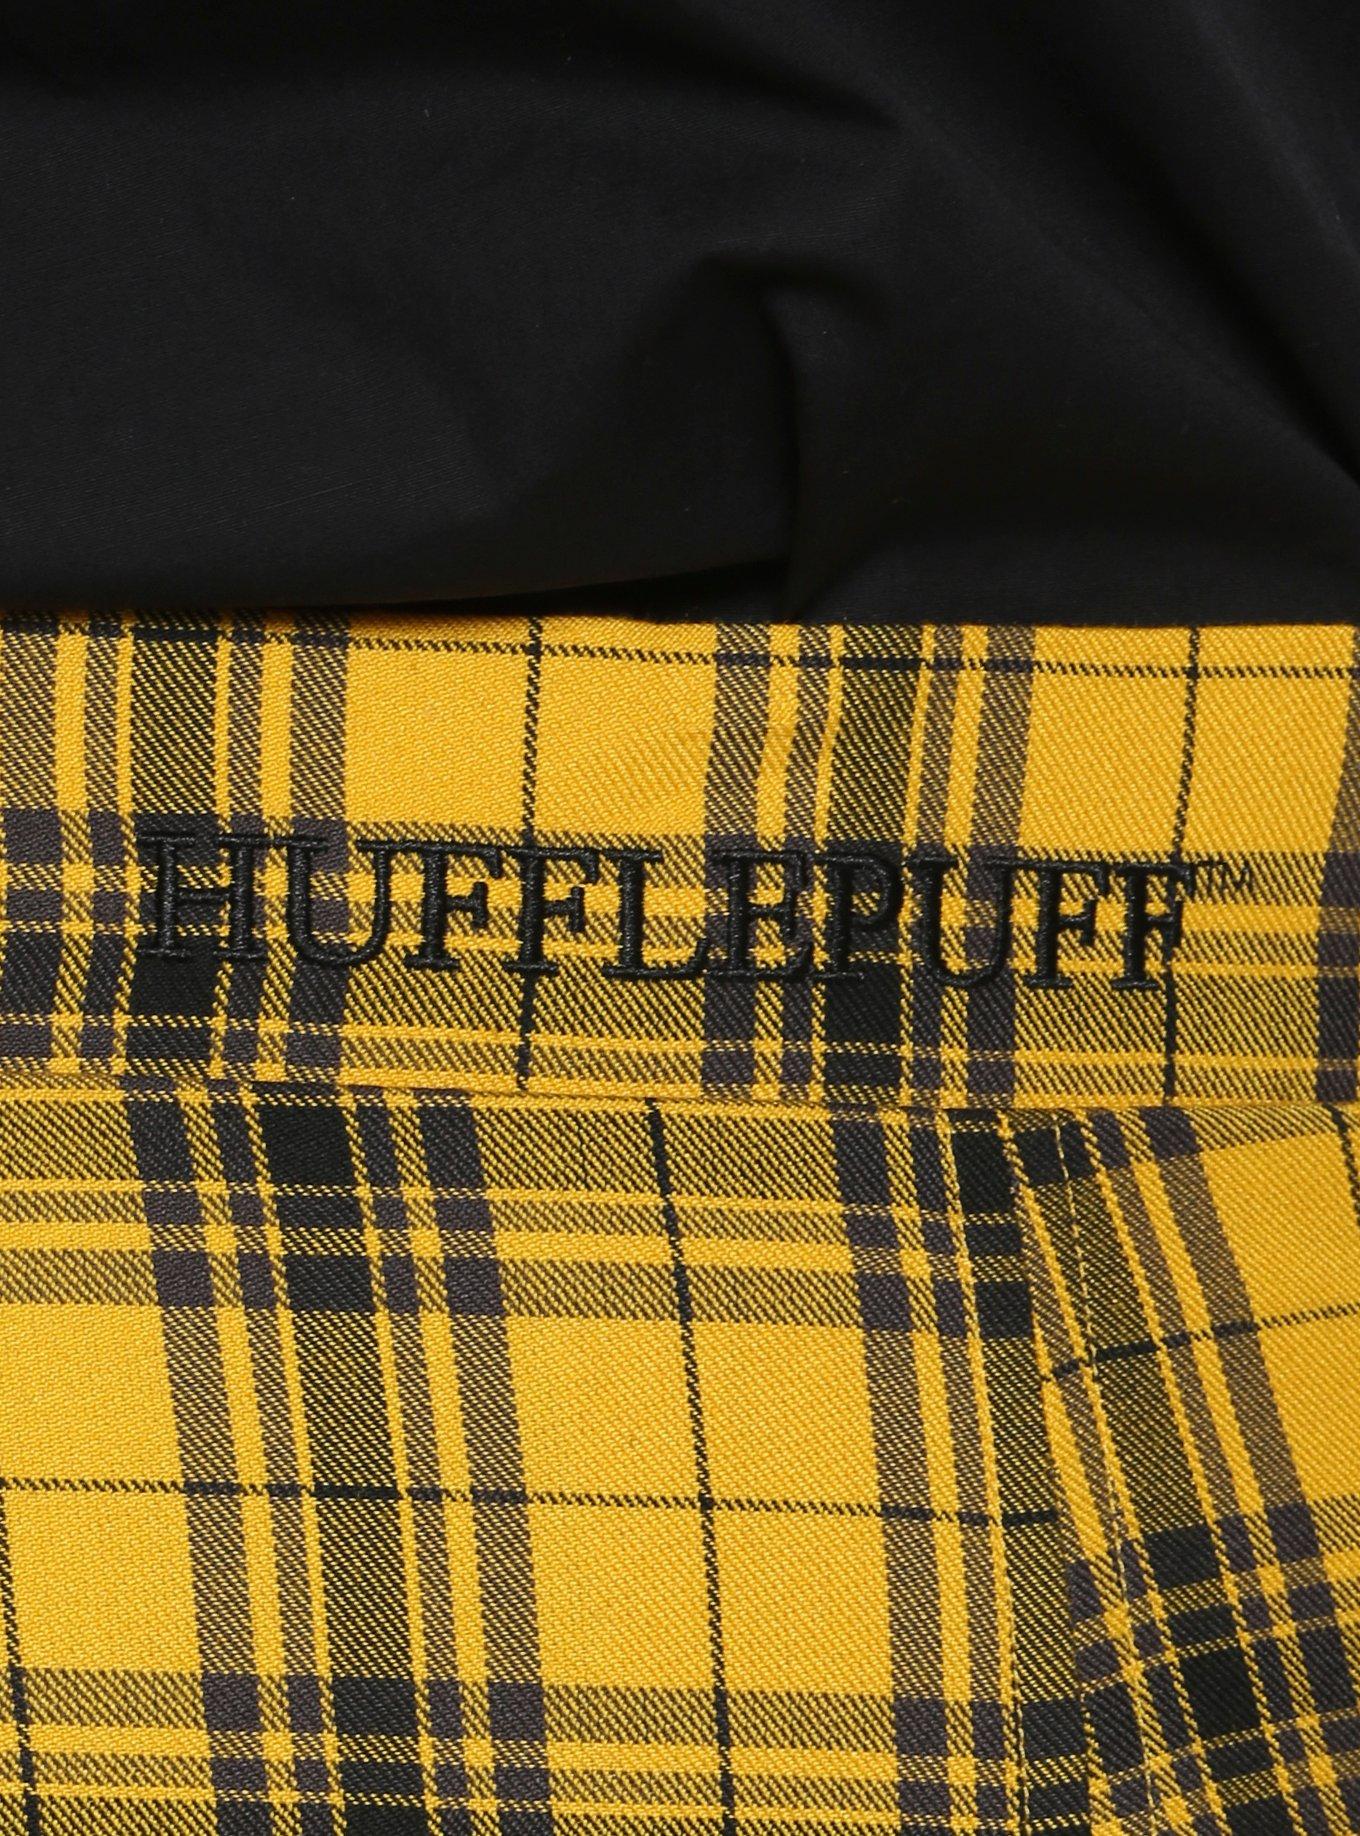 Harry Potter Hufflepuff Pleated Plaid Skirt Plus Size, PLAID - YELLOW, alternate